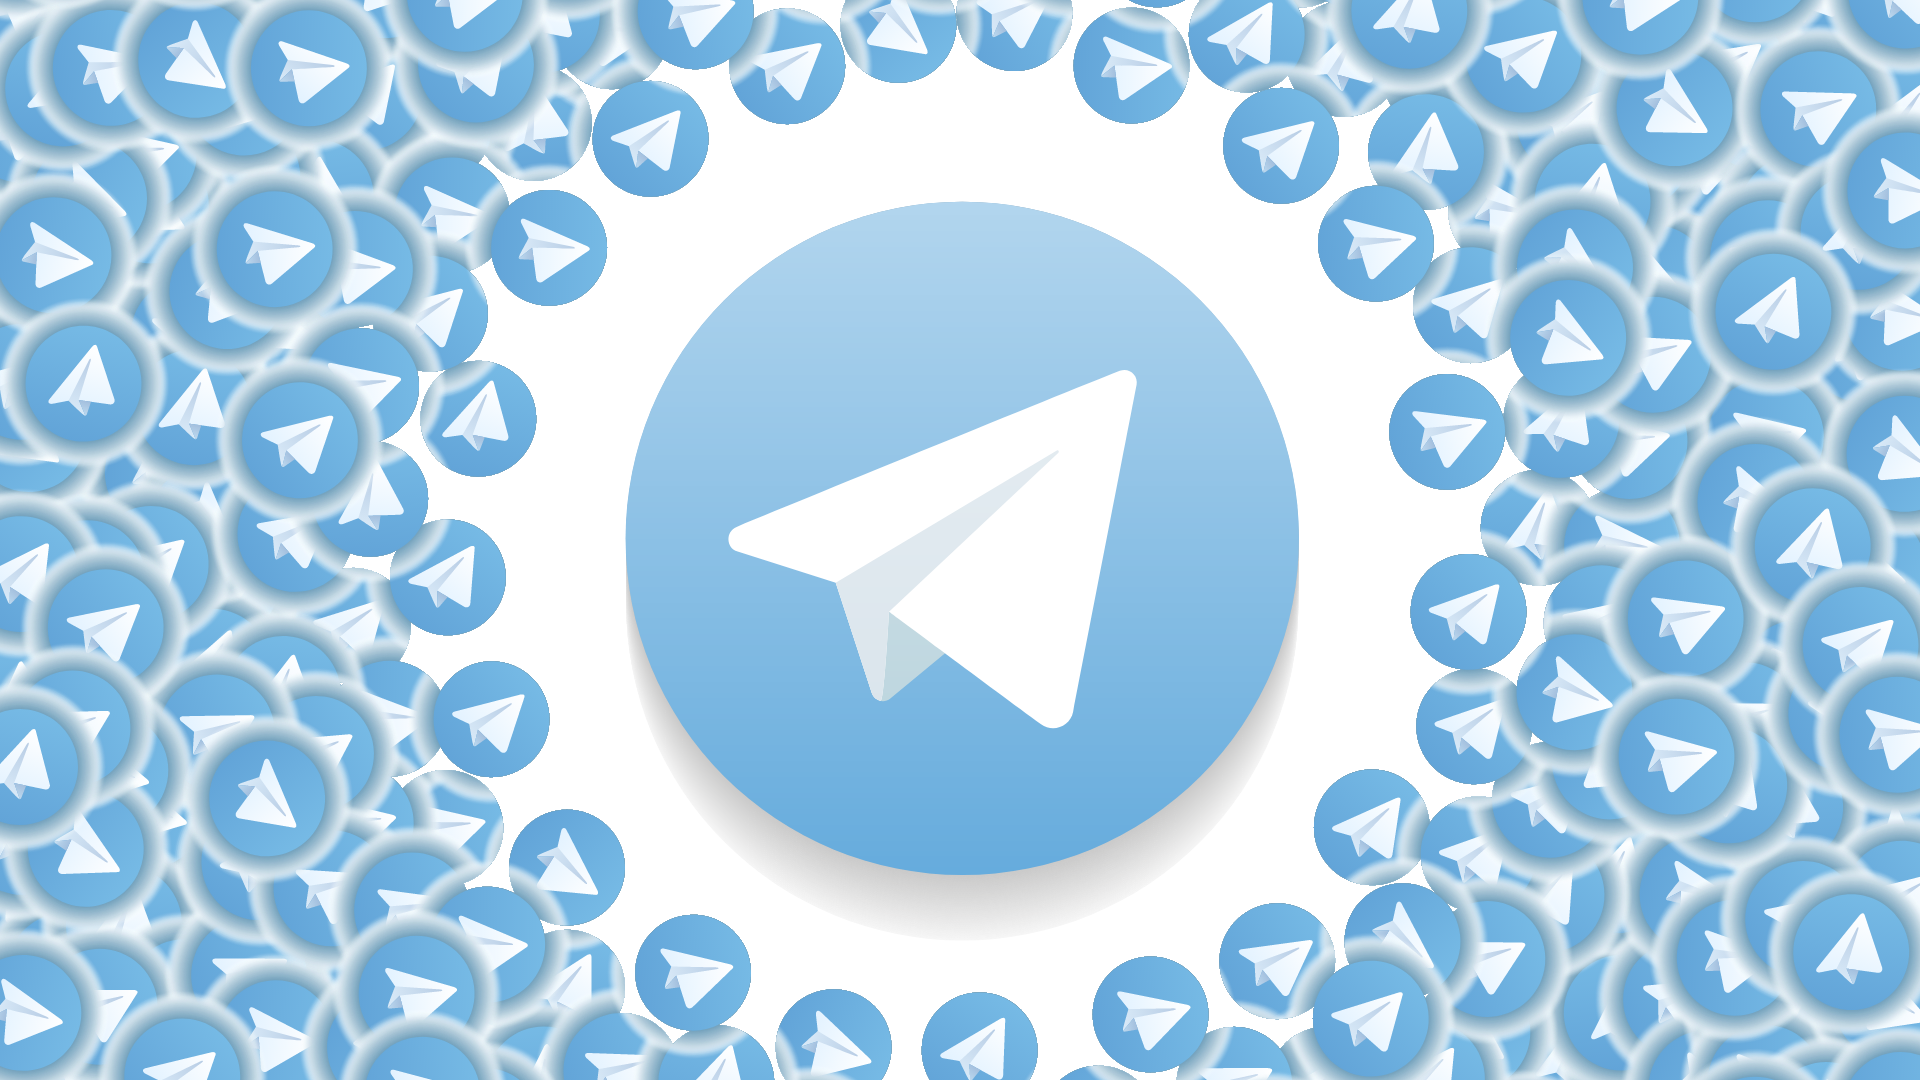 Telegram HD Wallpaper